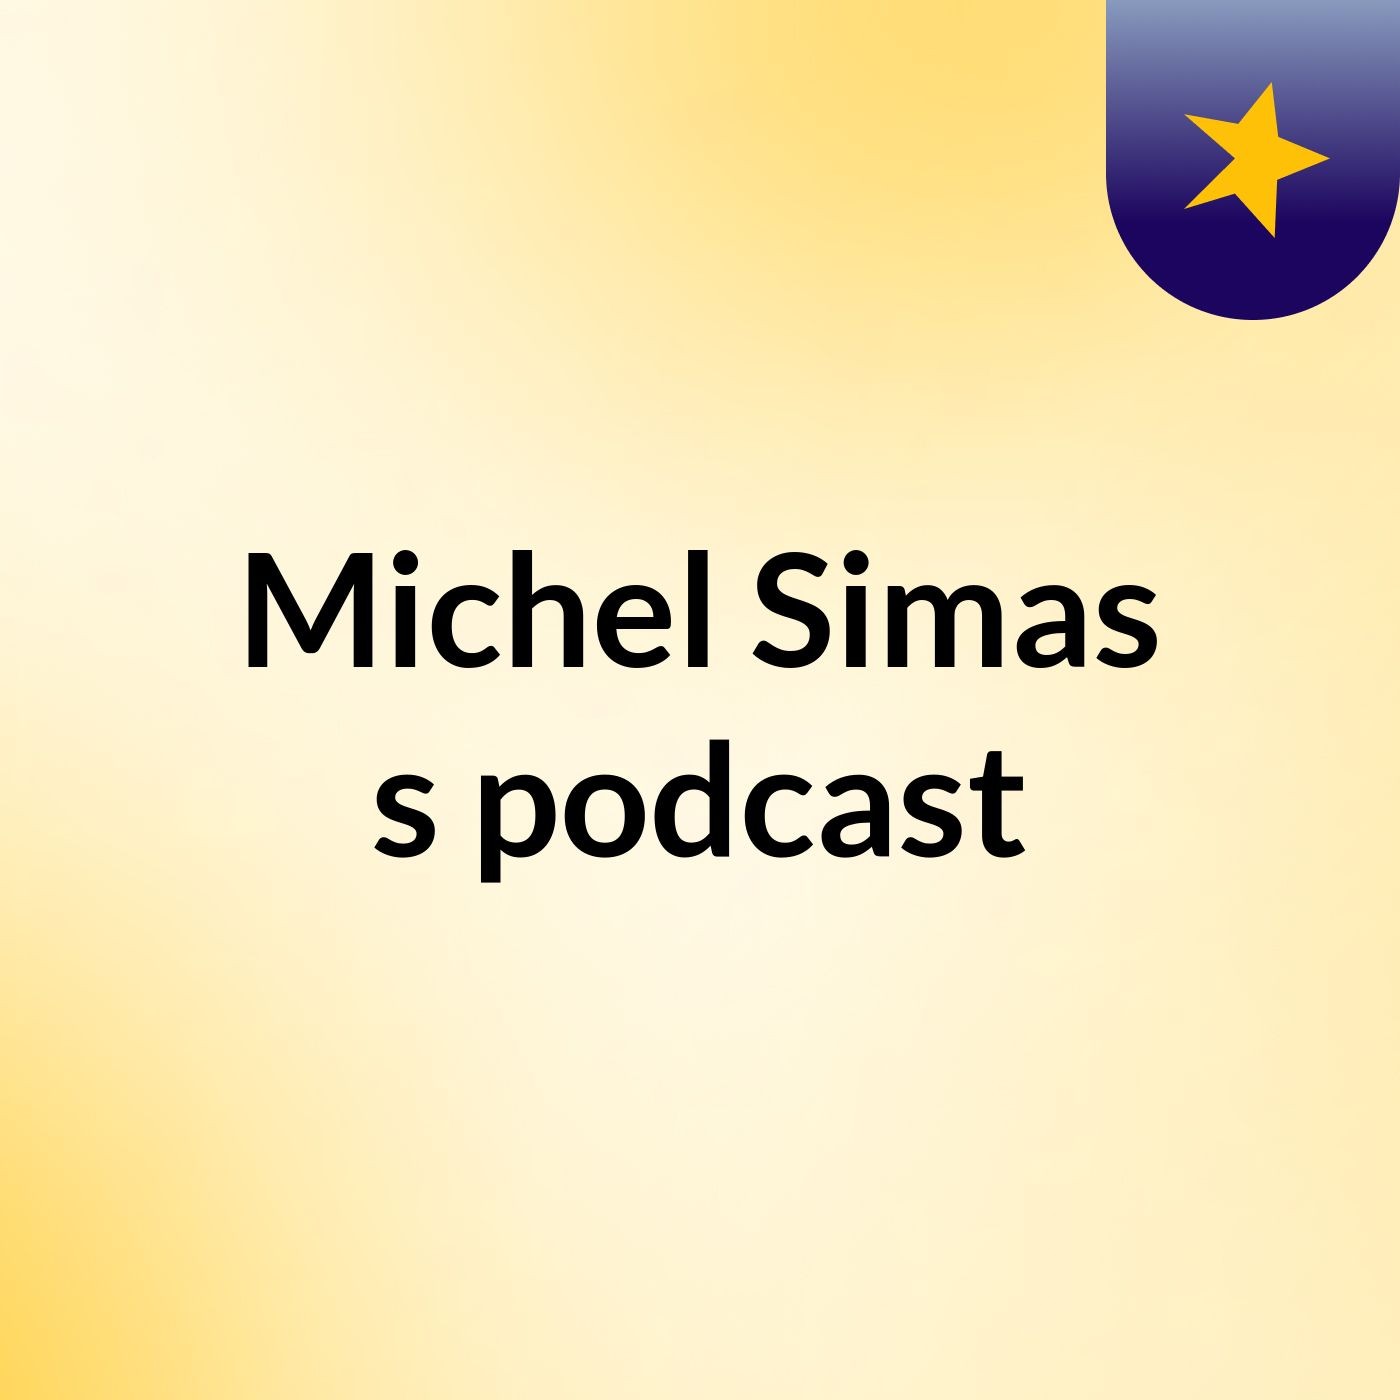 Michel Simas's podcast